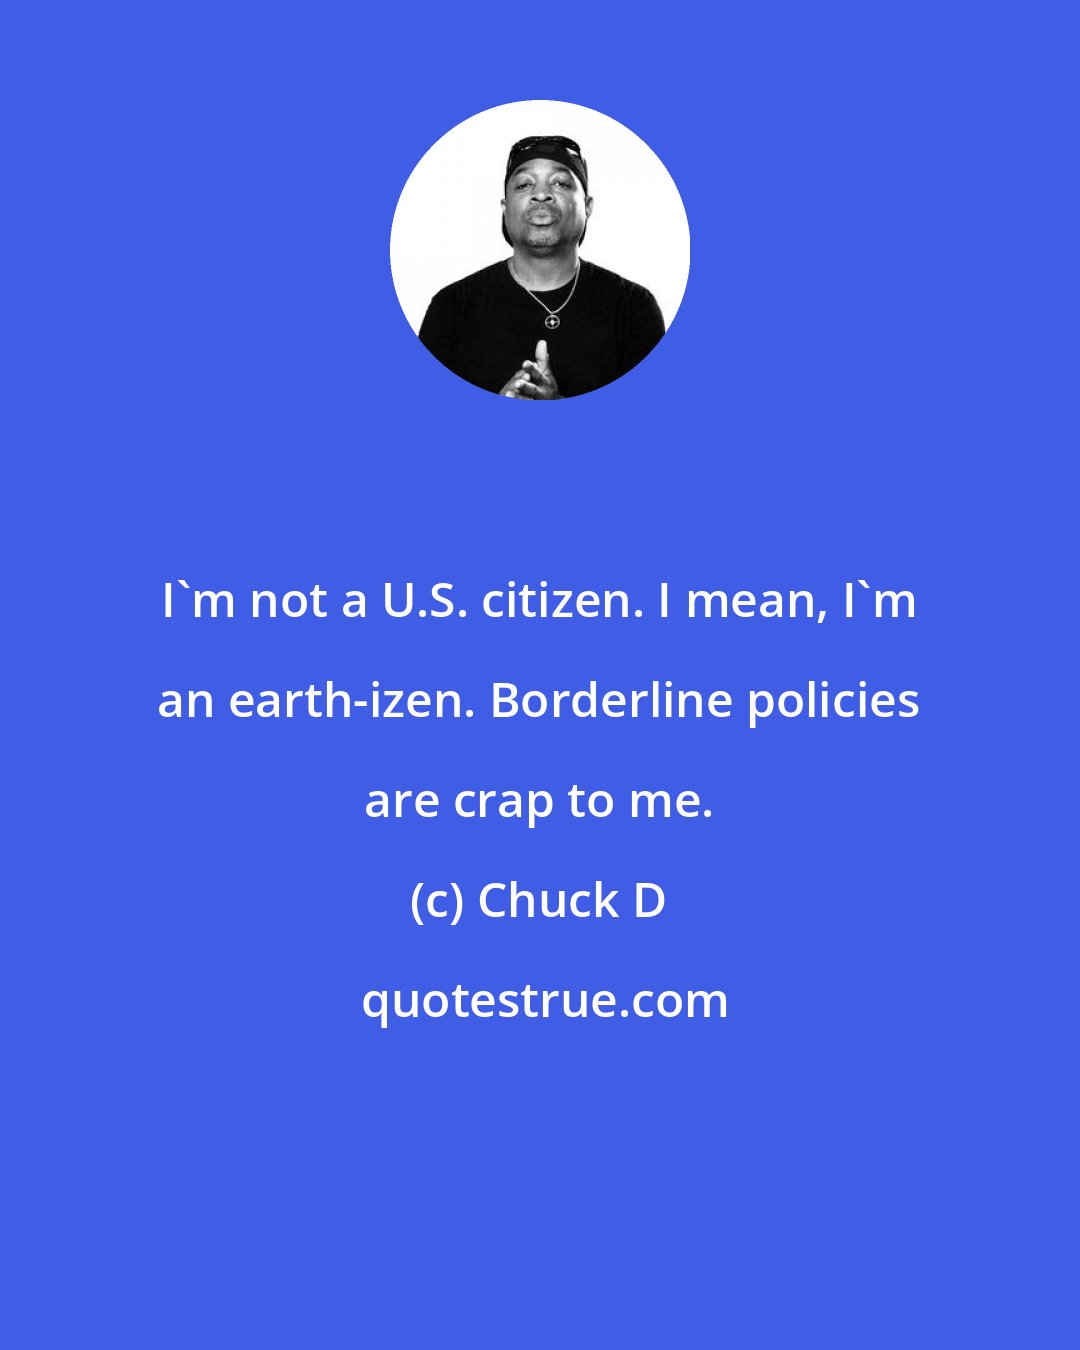 Chuck D: I'm not a U.S. citizen. I mean, I'm an earth-izen. Borderline policies are crap to me.